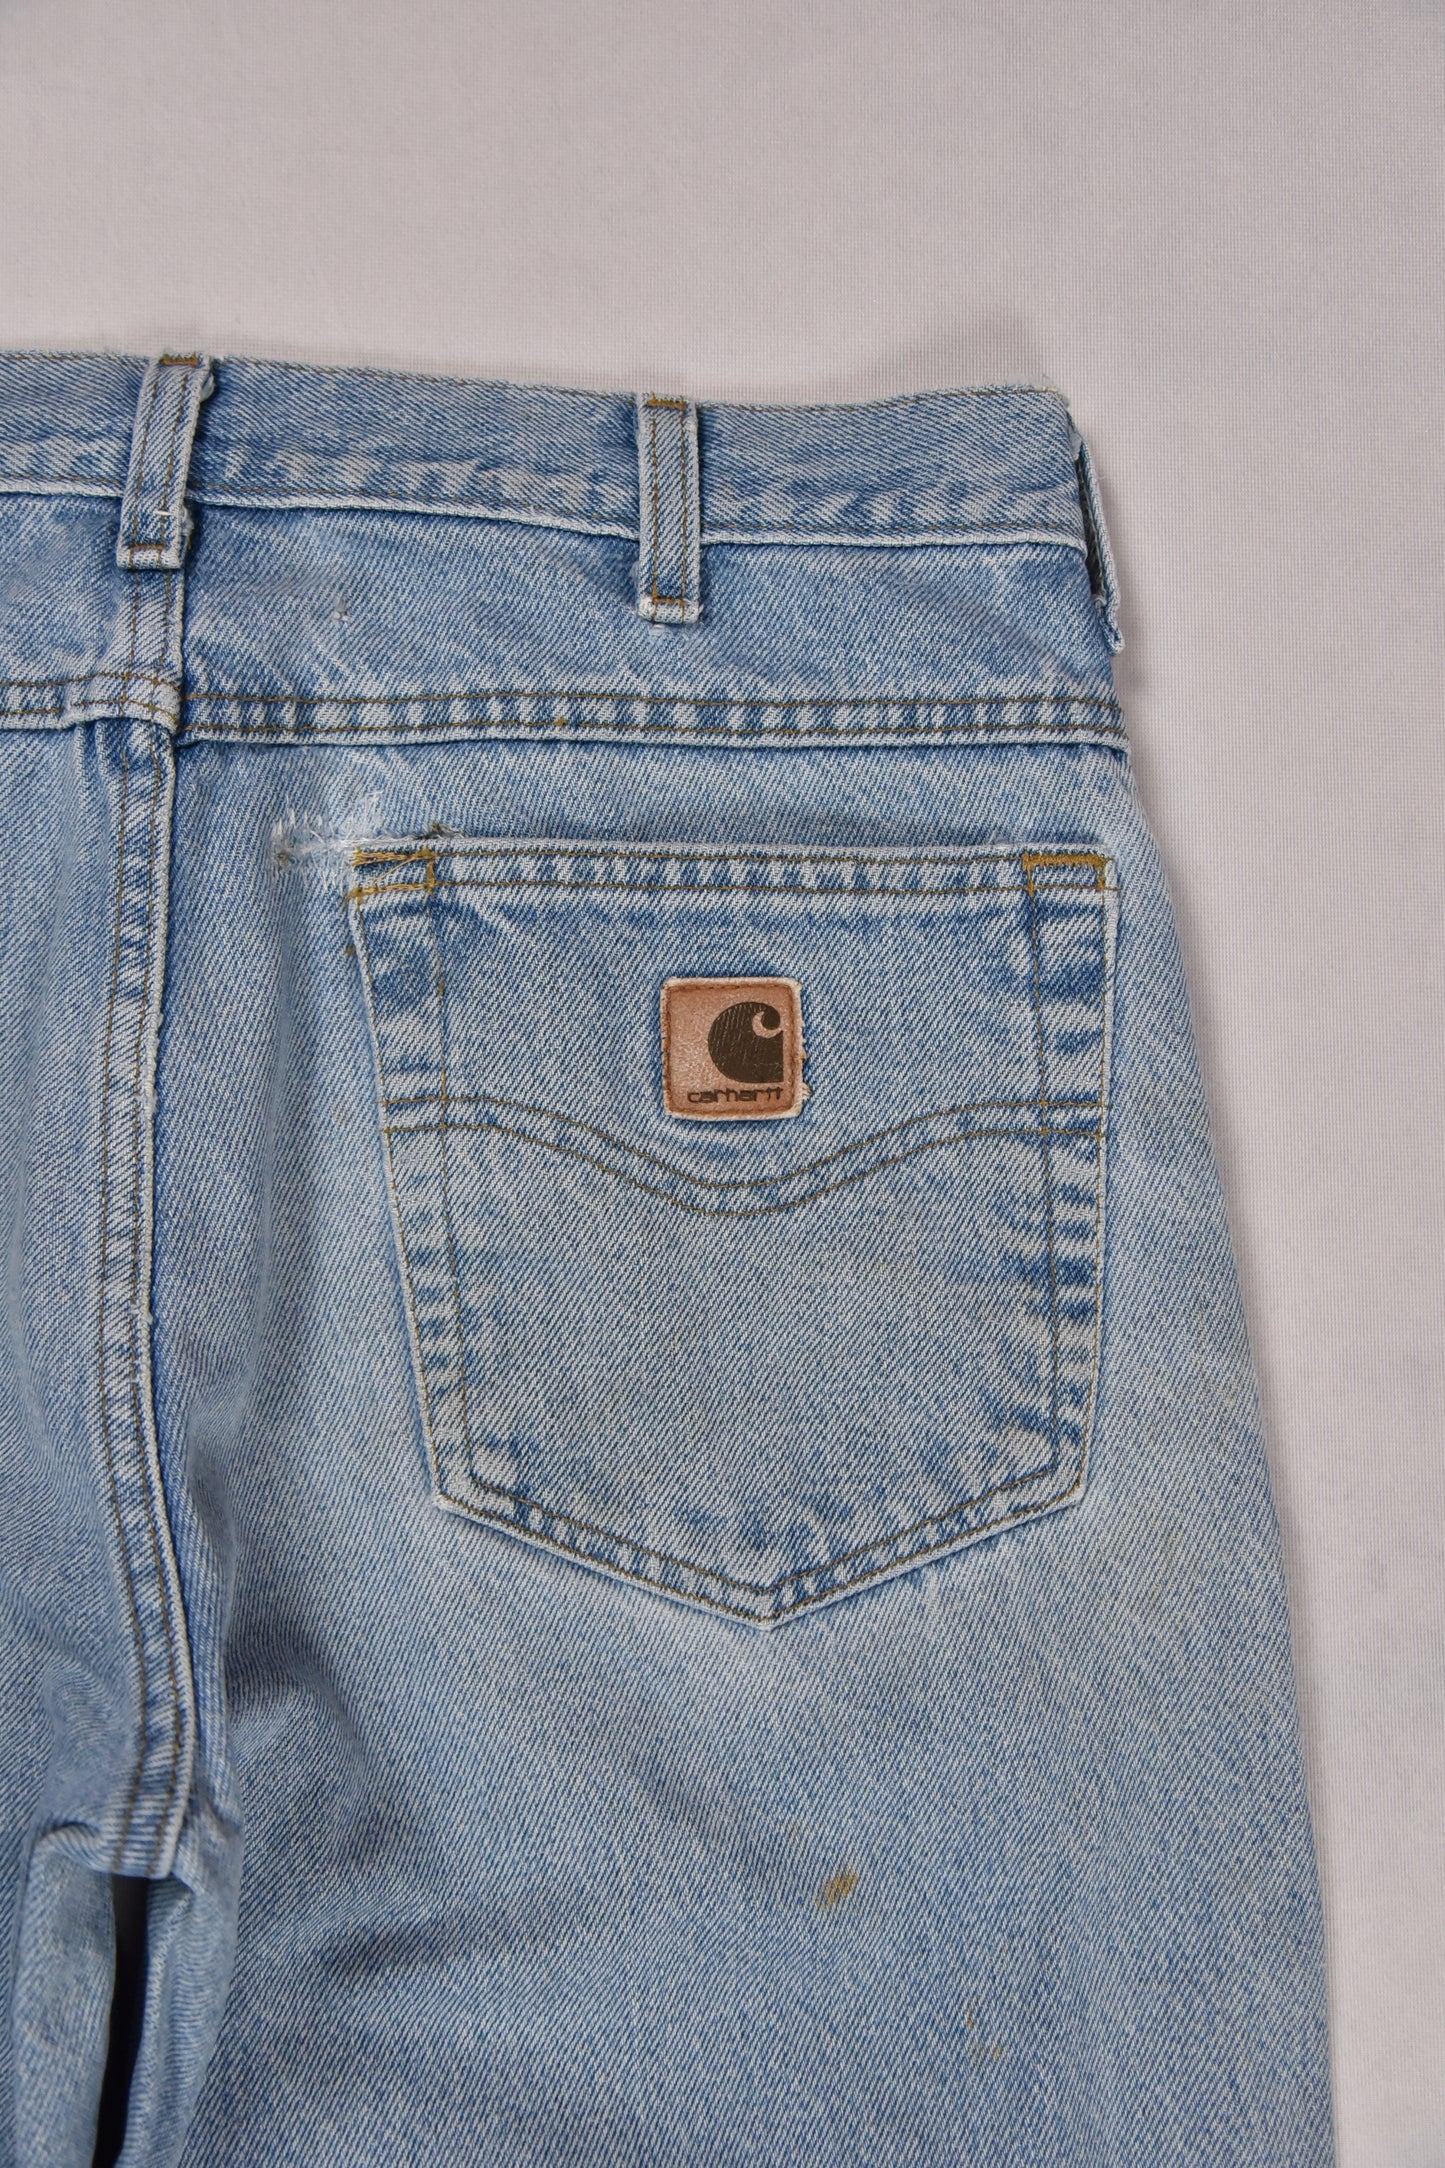 Carhartt Jeans Vintage / 32x30